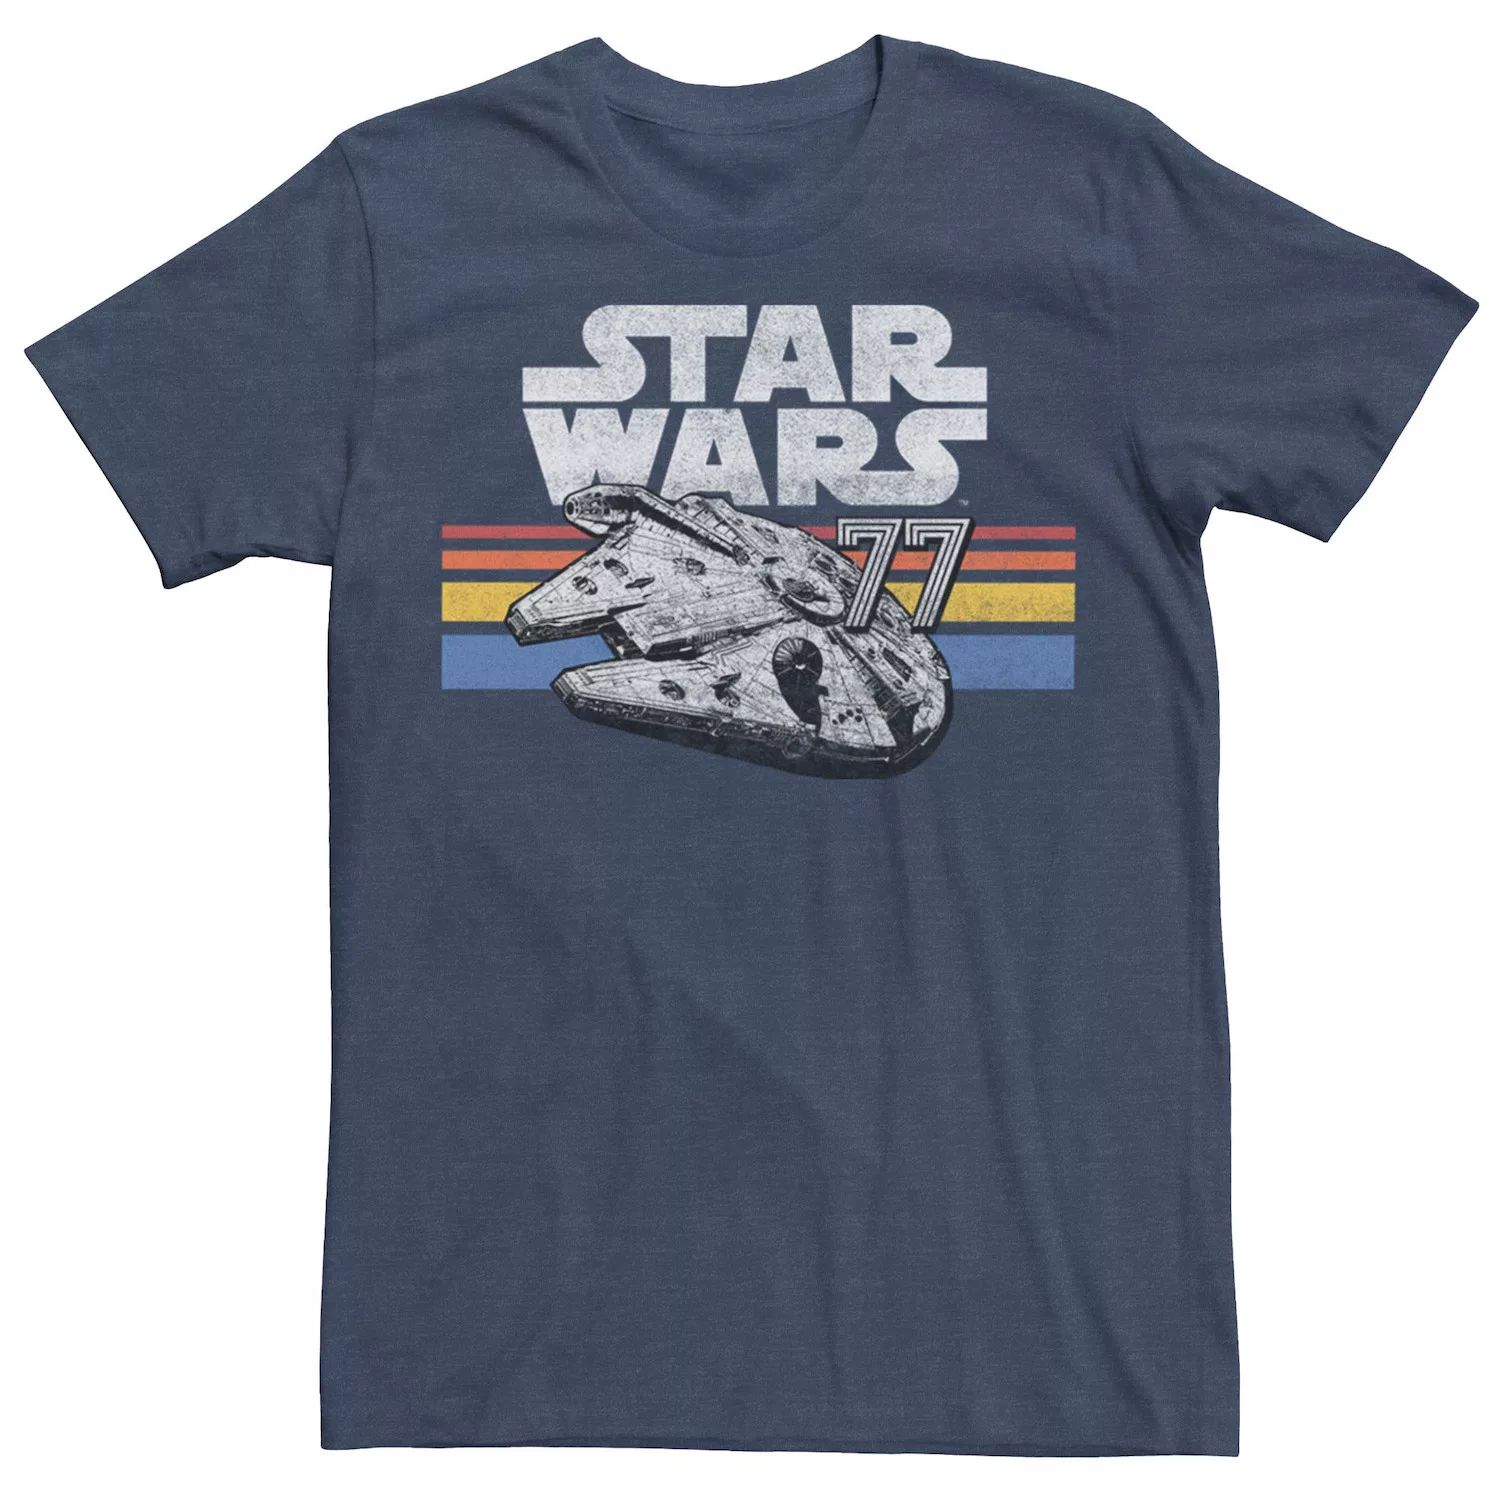 Мужская футболка с логотипом Millennium Falcon 77 Retro Lines Star Wars